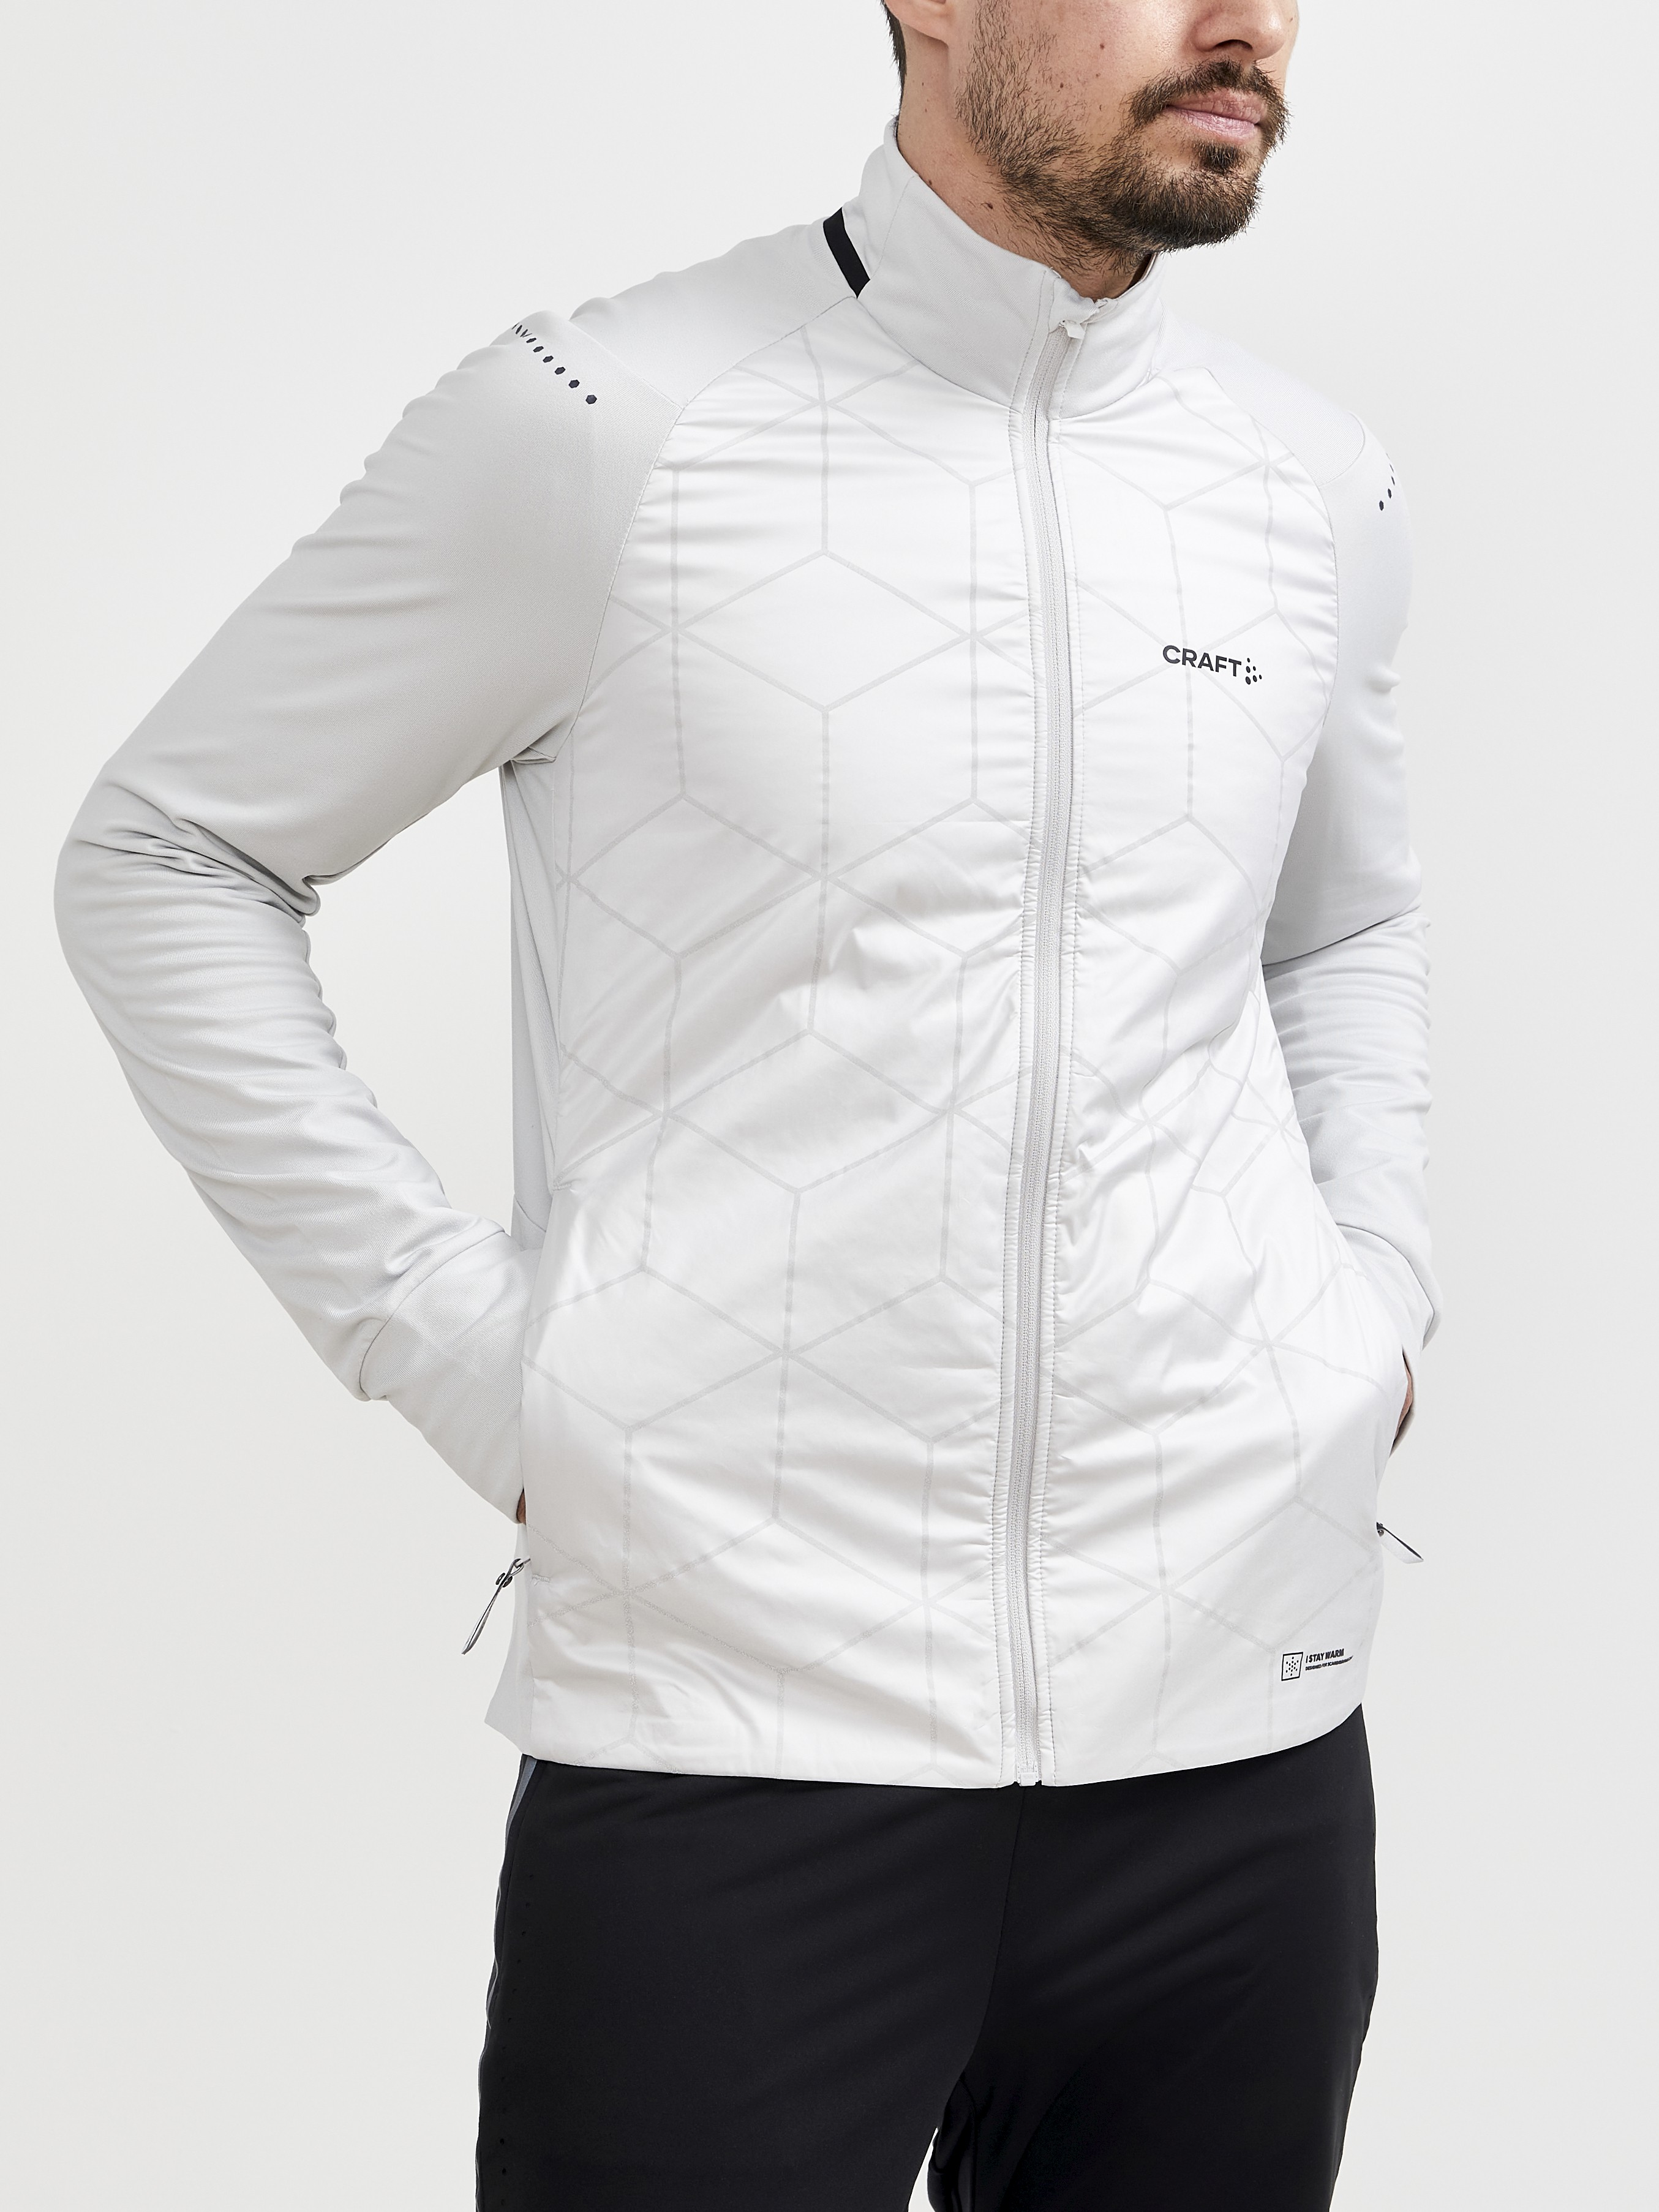 ADV SubZ Lumen Jacket 2 M - Grey | Craft Sportswear